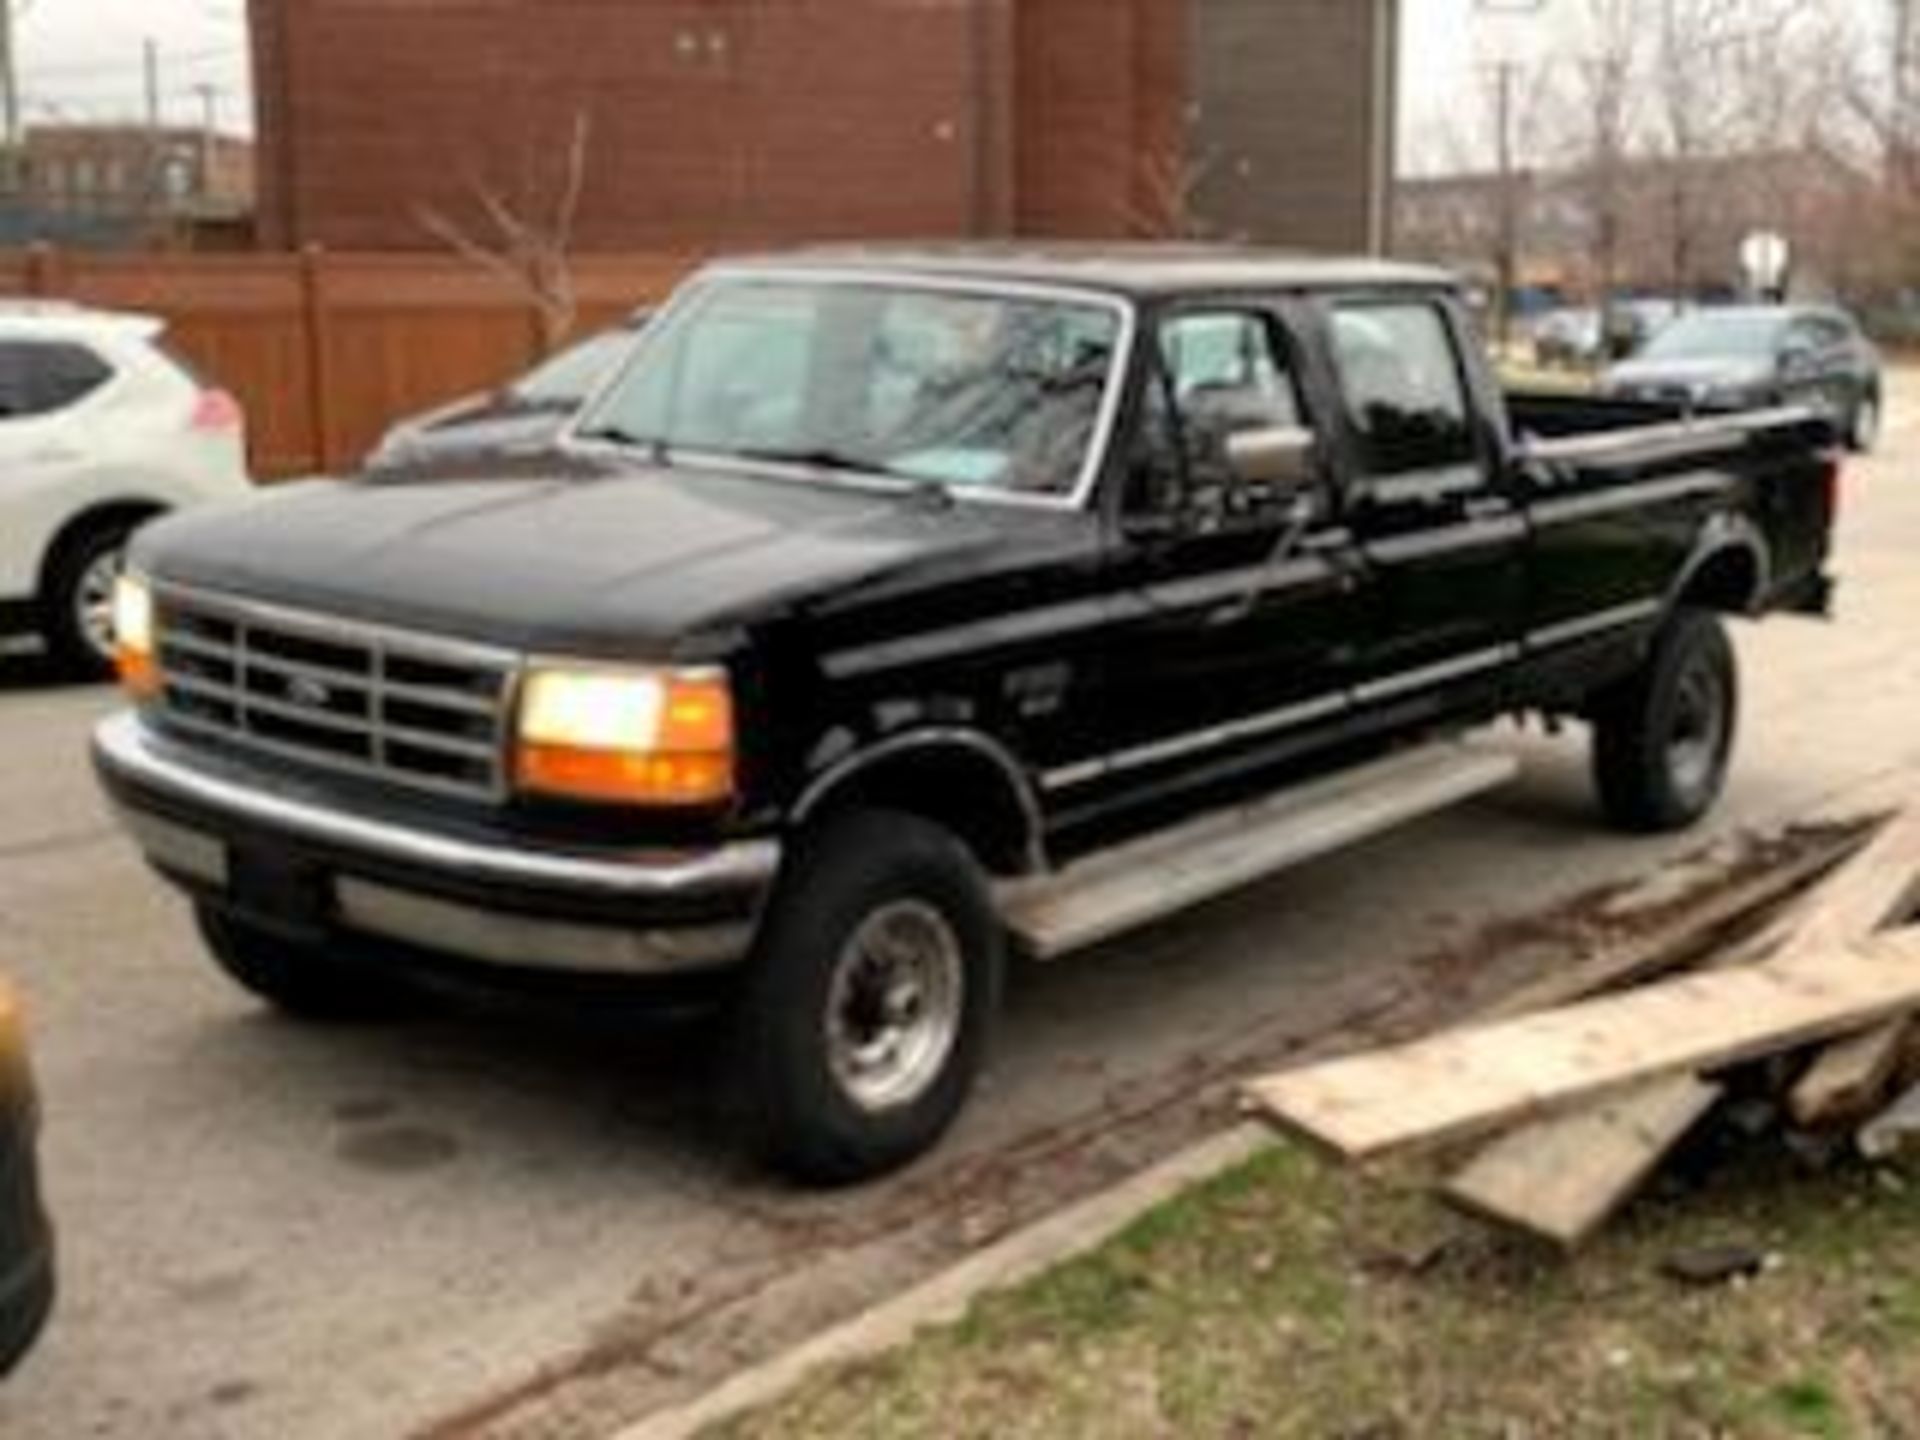 Year: 1997 Make: Ford Model: F-350 Vehicle Type: Pickup Truck Mileage: 240,xxx Body Type: Crew Cab E